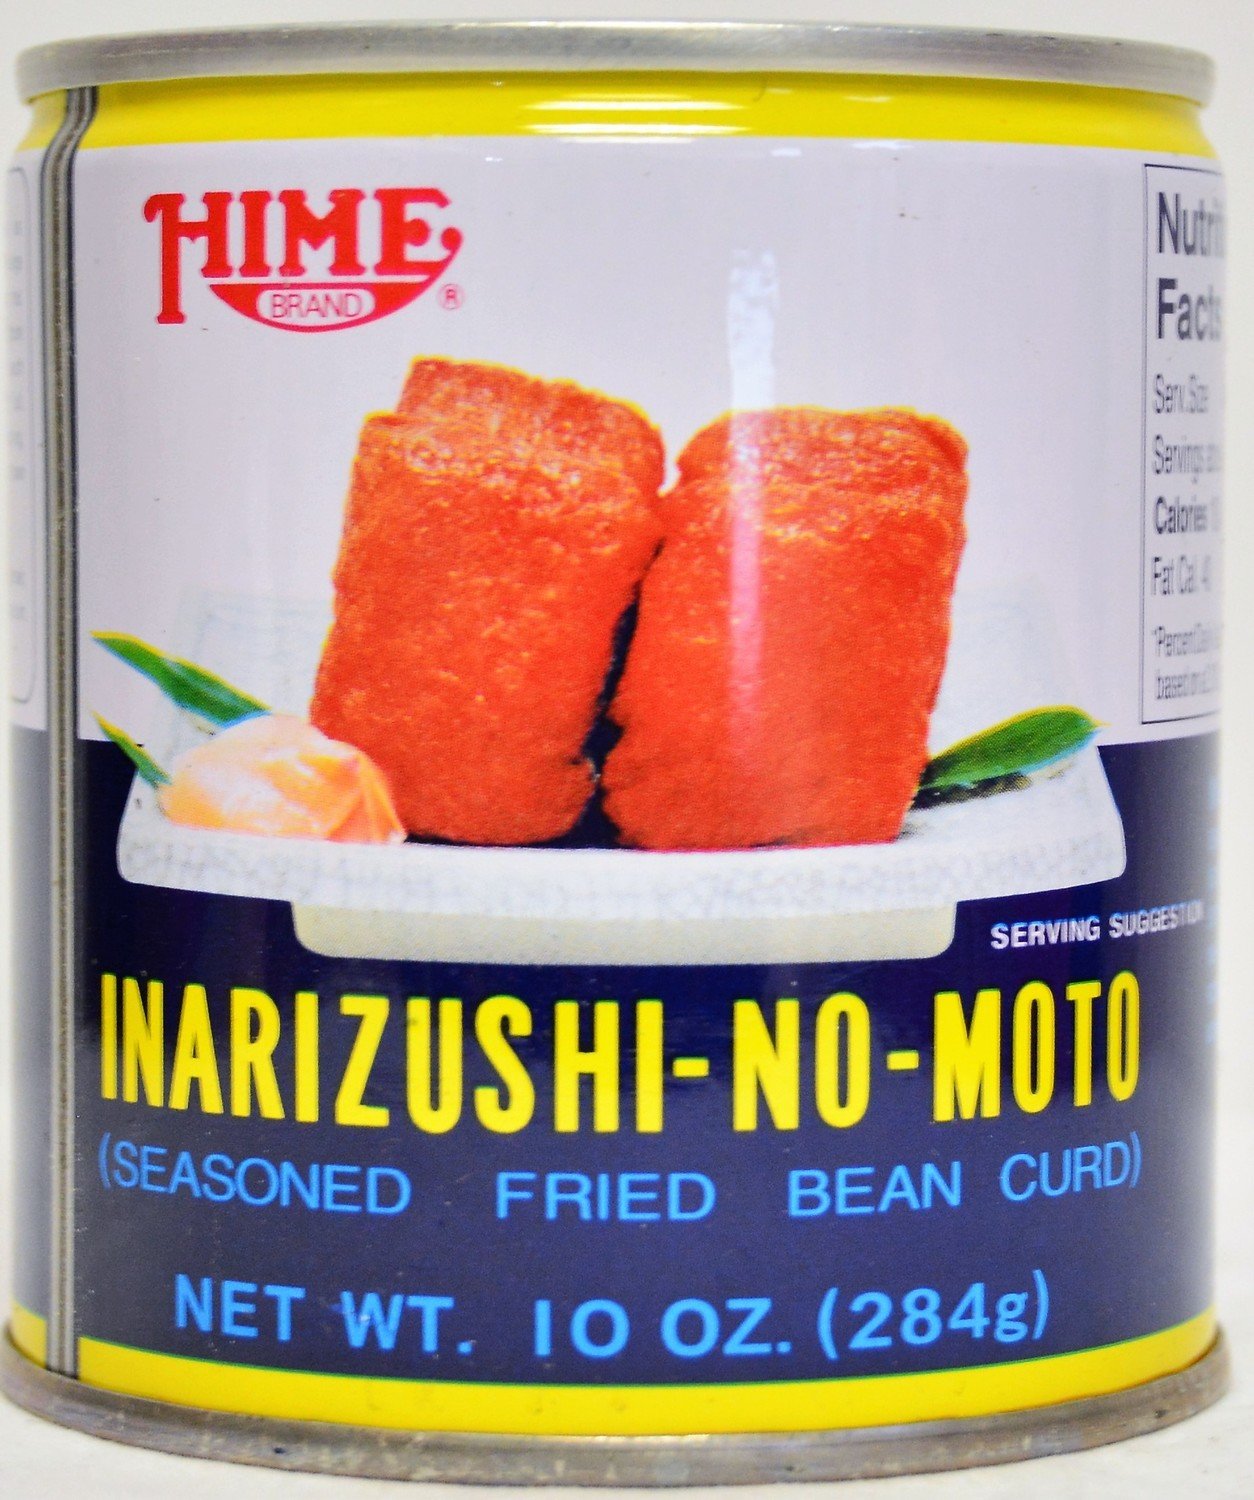 InarizushiNoMoto (Seasoned Fried Bean Cured) 10 oz